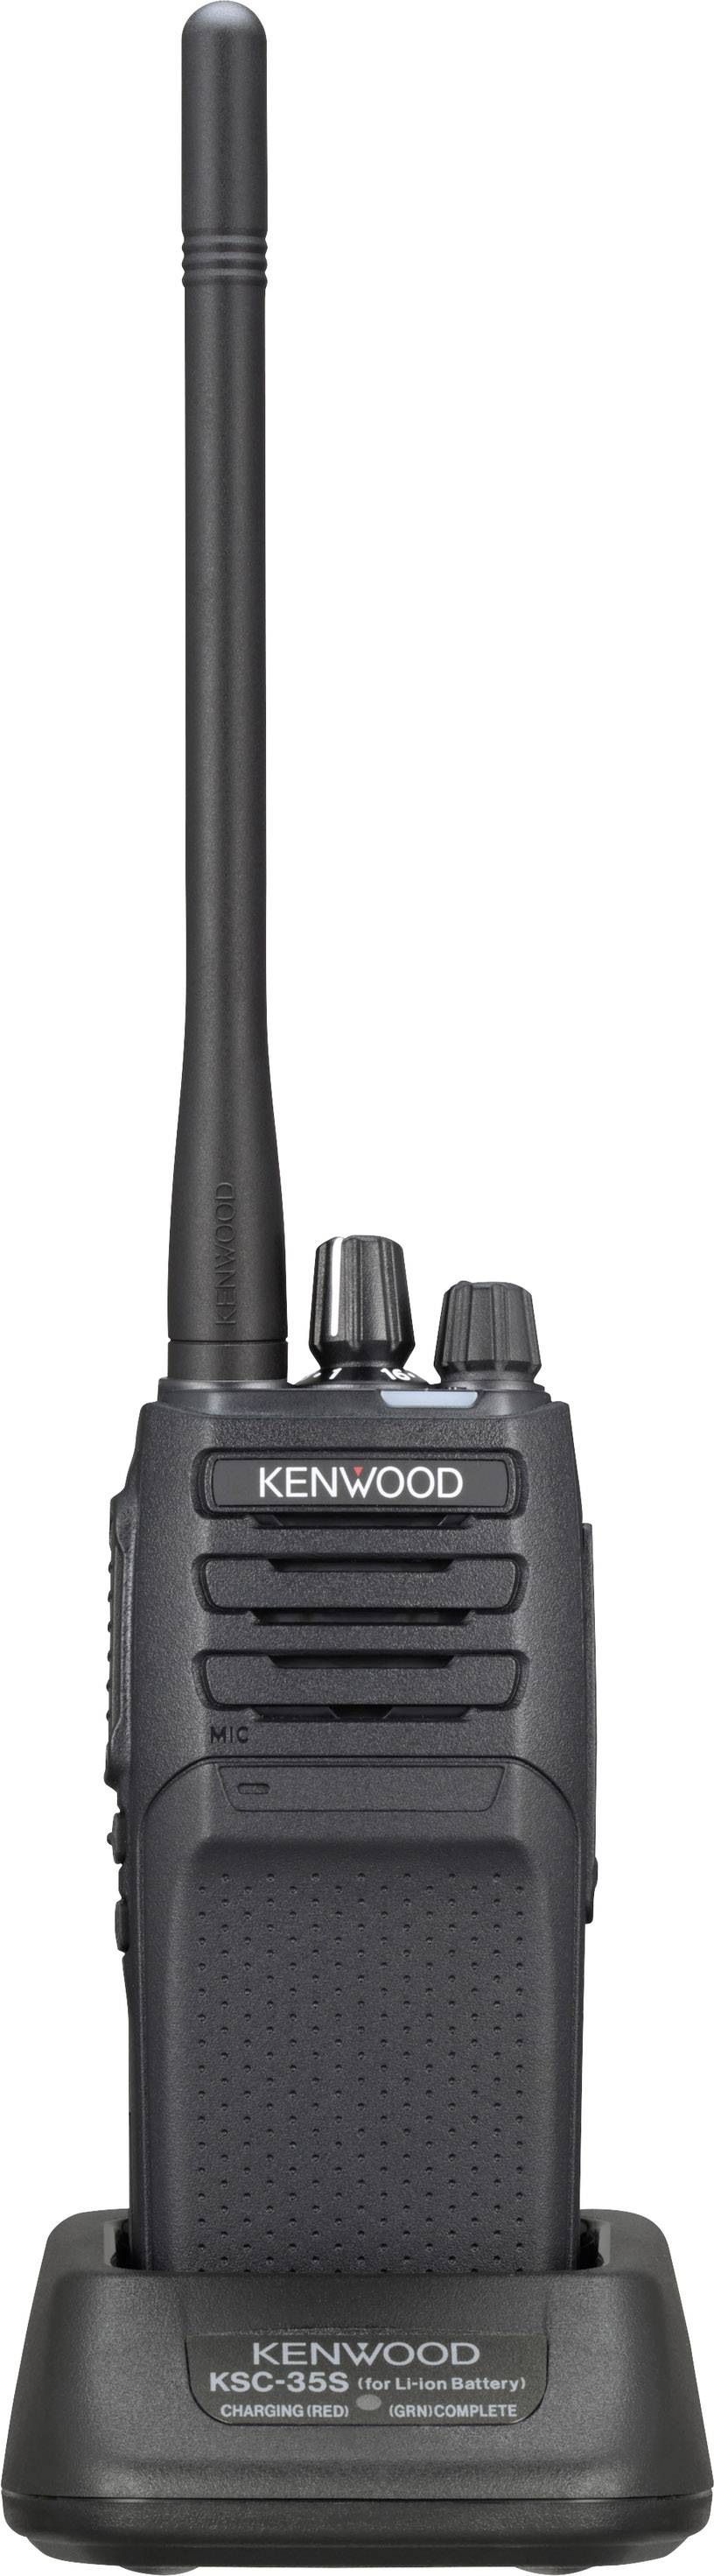 KENWOOD NX-1200D-FN-SET-1 Freenet-Handfunkgerät